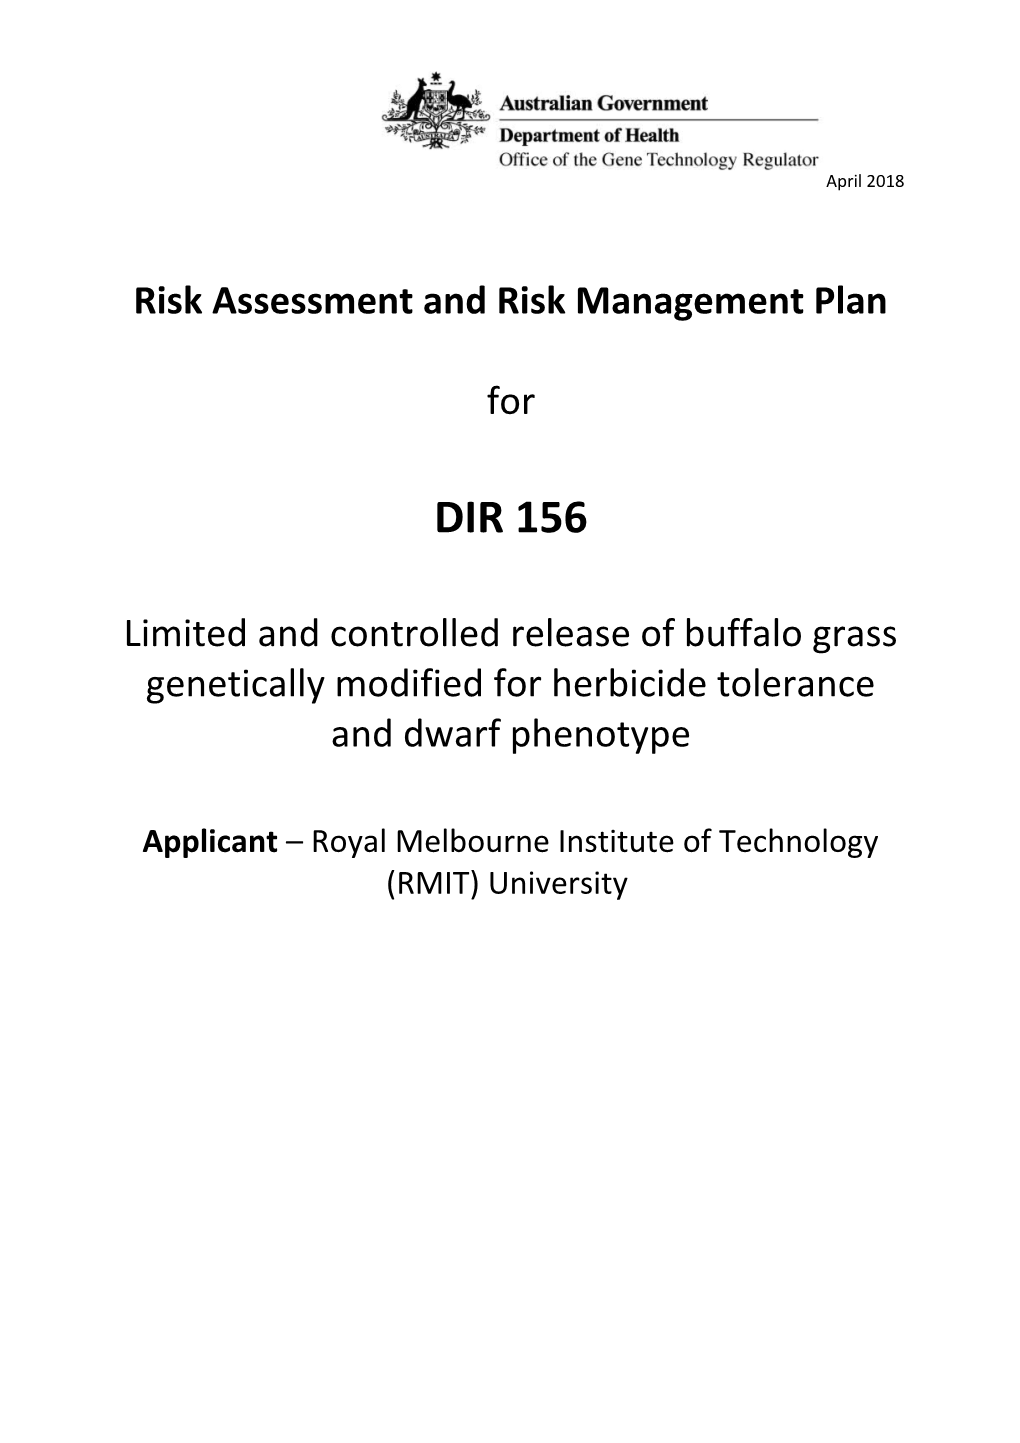 DIR 156 Risk Assessment and Risk Management Plan